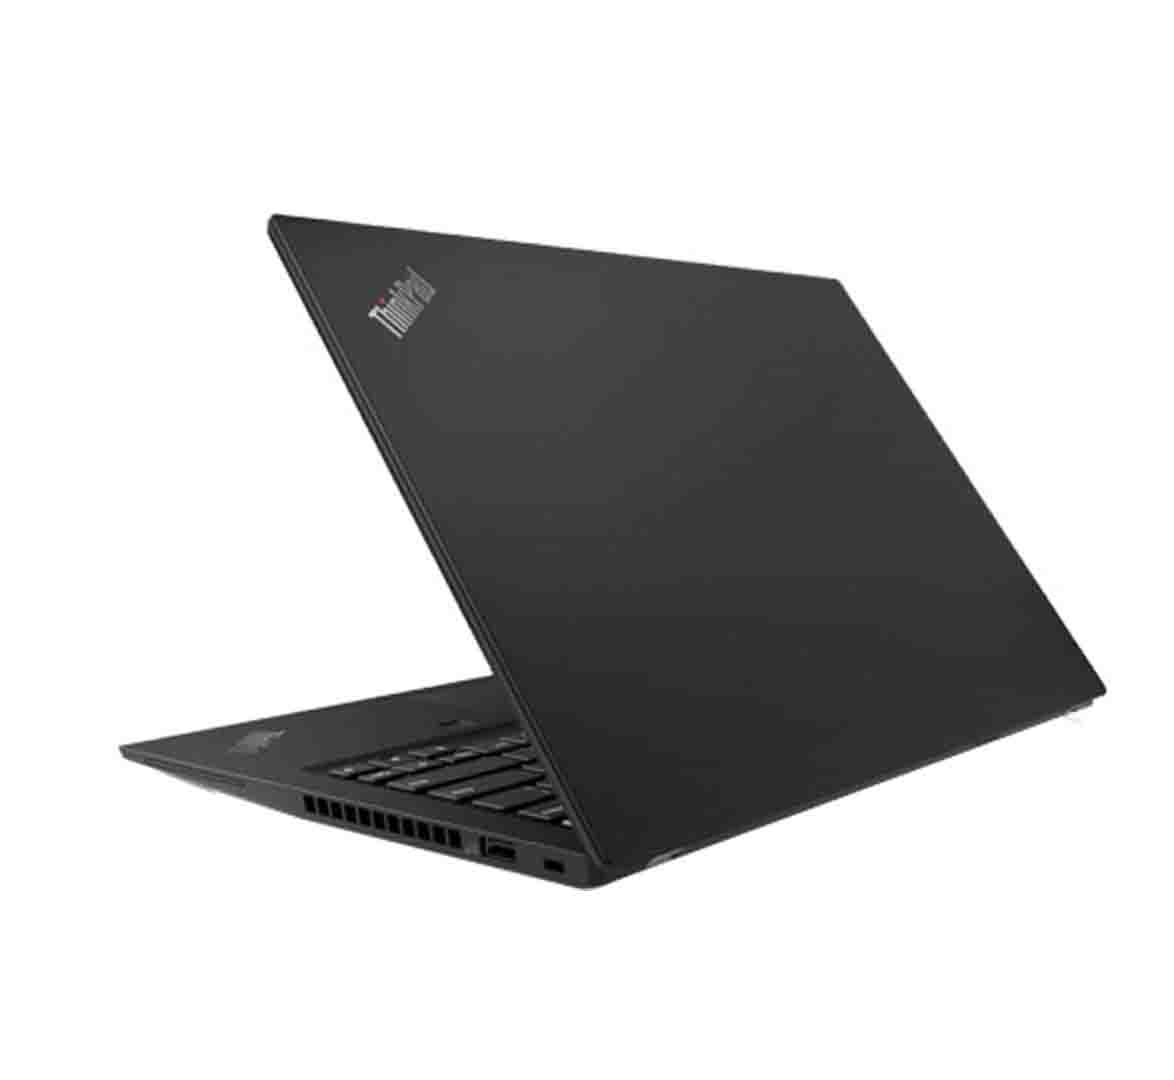 Lenovo ThinkPad T490s Business Laptop, Intel Core i7-8th Generation CPU, 16GB RAM, 512GB SSD, 14 inch Display, Windows 10 Pro, Refurbished Laptop